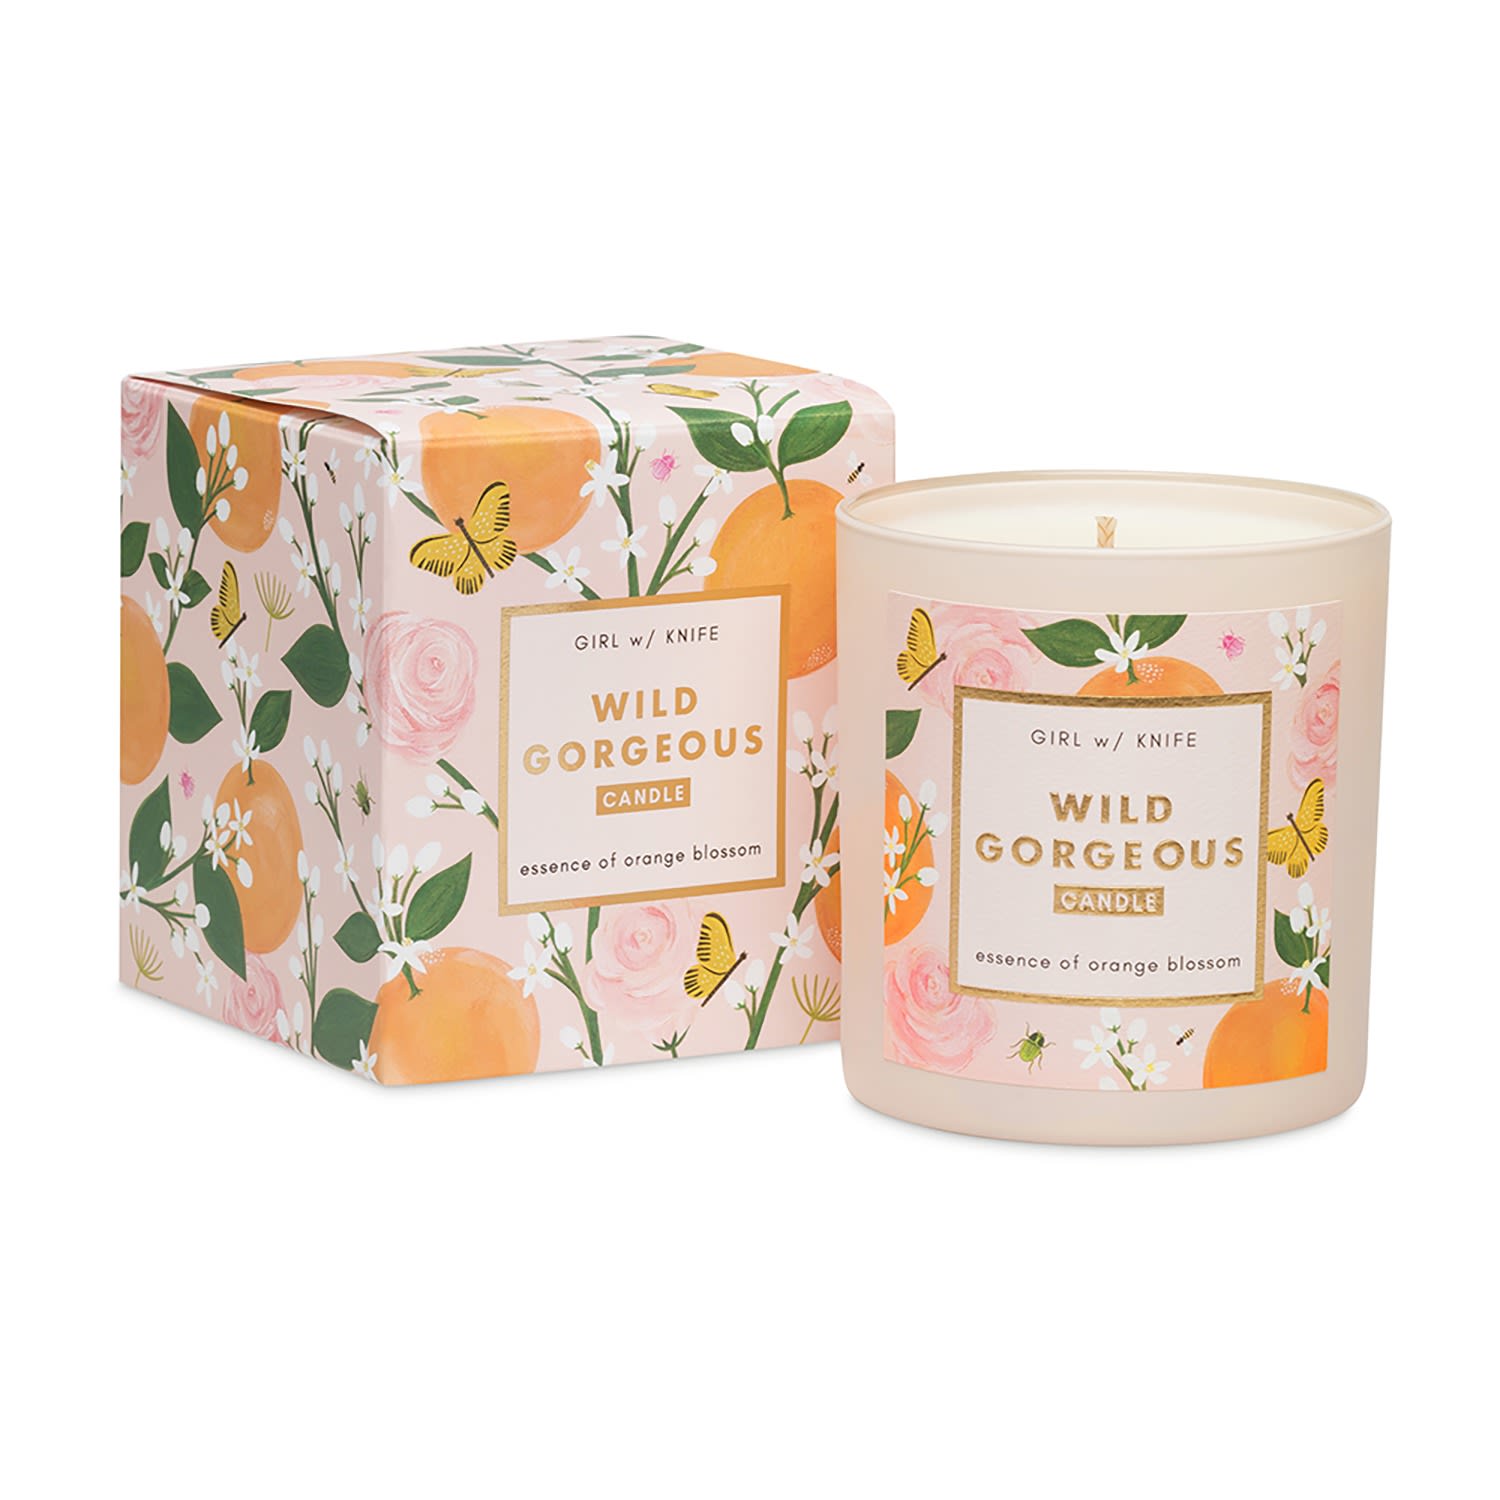 Wild Gorgeous Candle - Essence Of Orange Blossom Girl W/ Knife